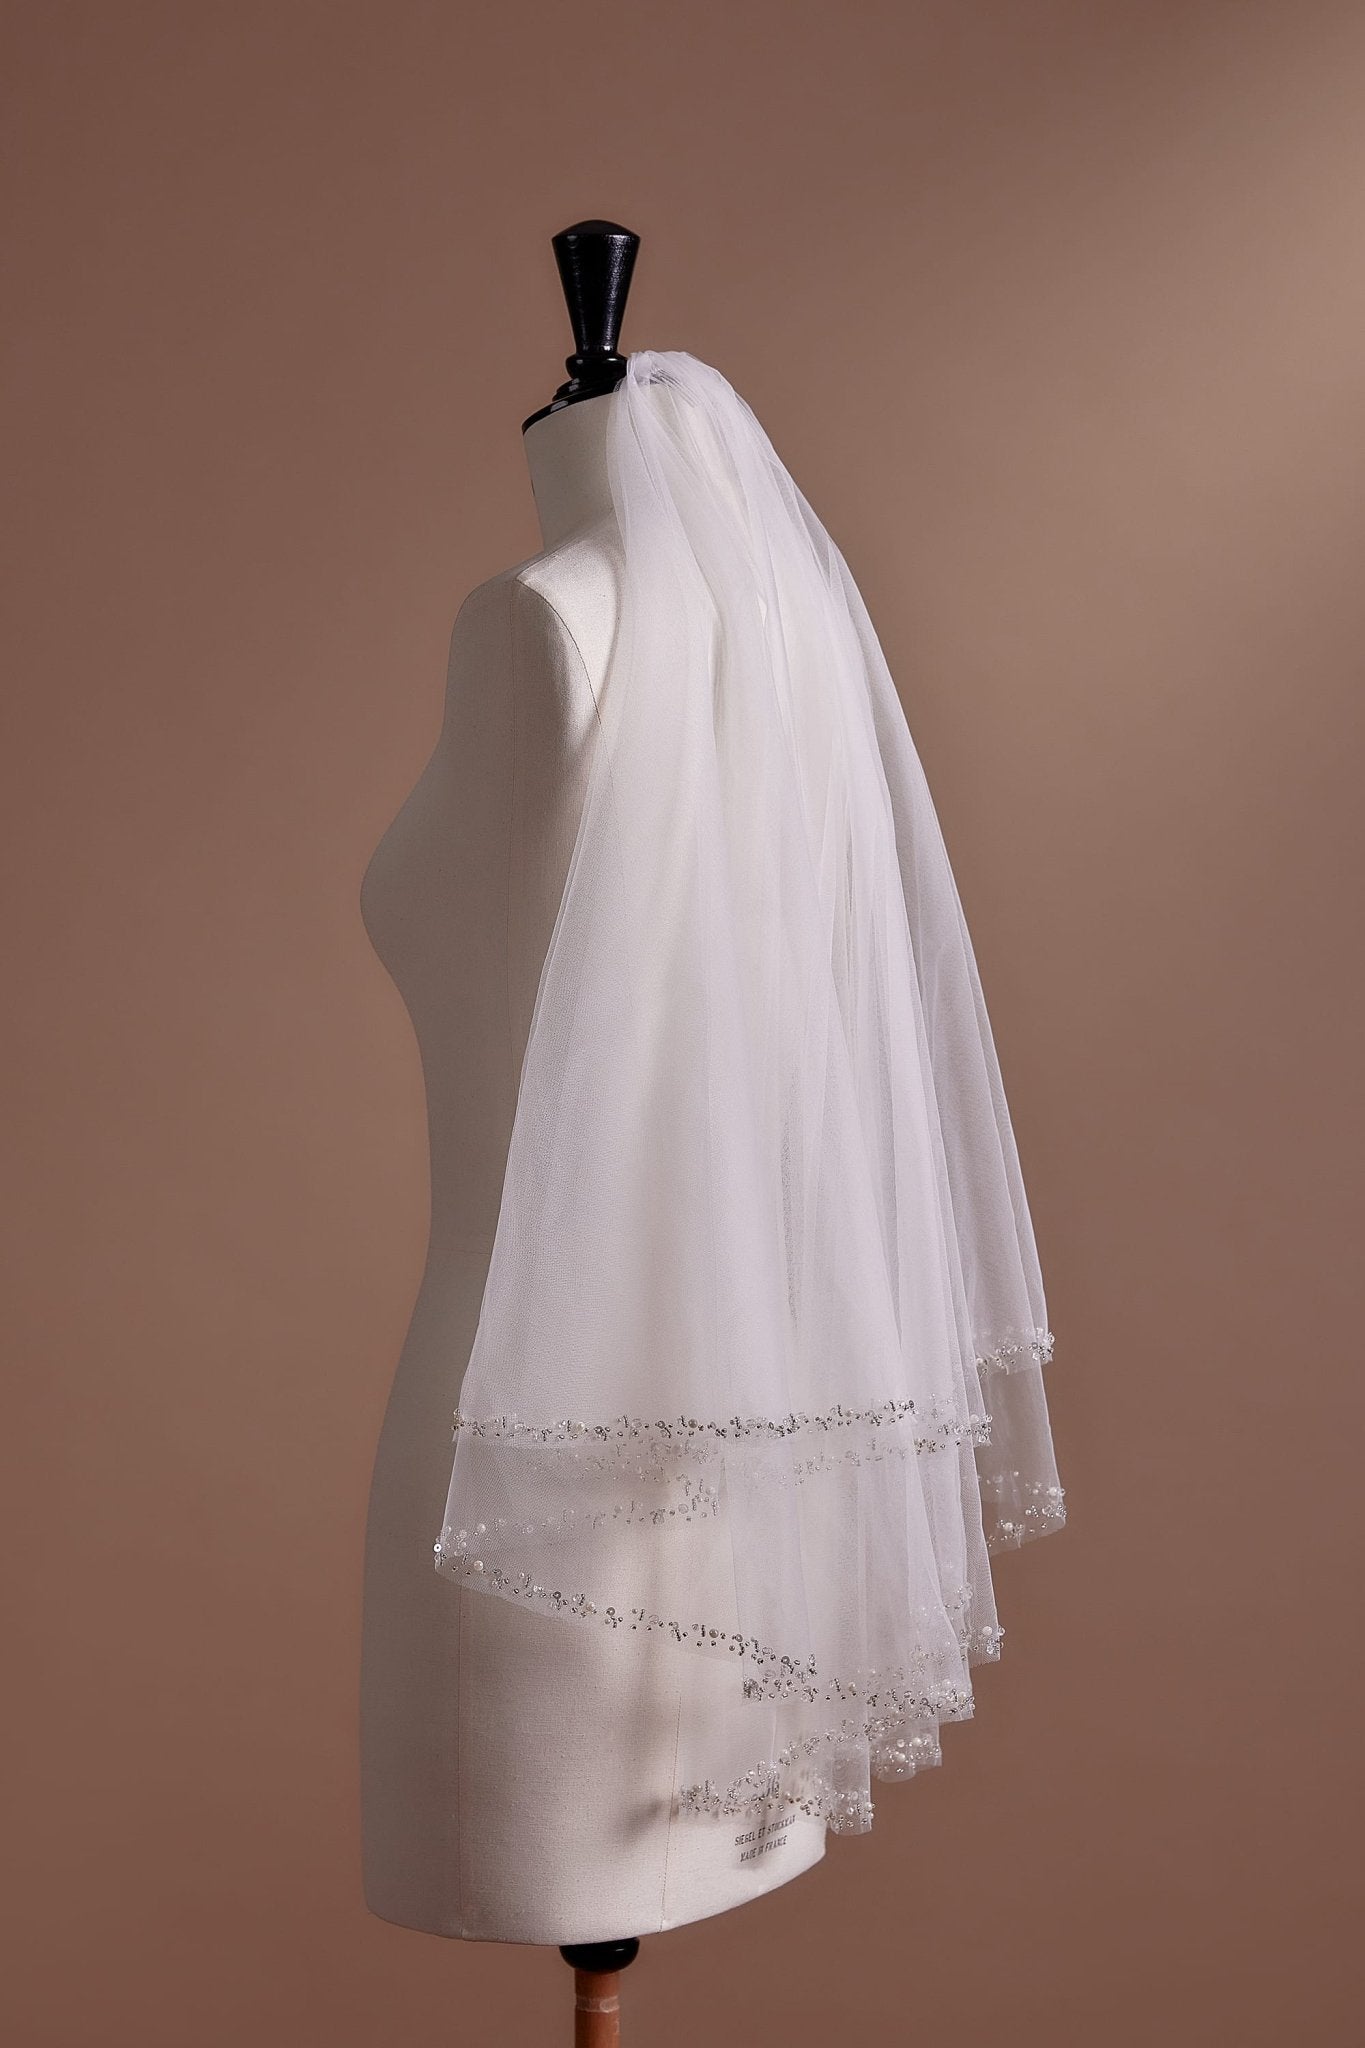 Charming Short Wedding Veil with Delicate Sequin Details and Elegant Lace Trim - WonderlandByLilian